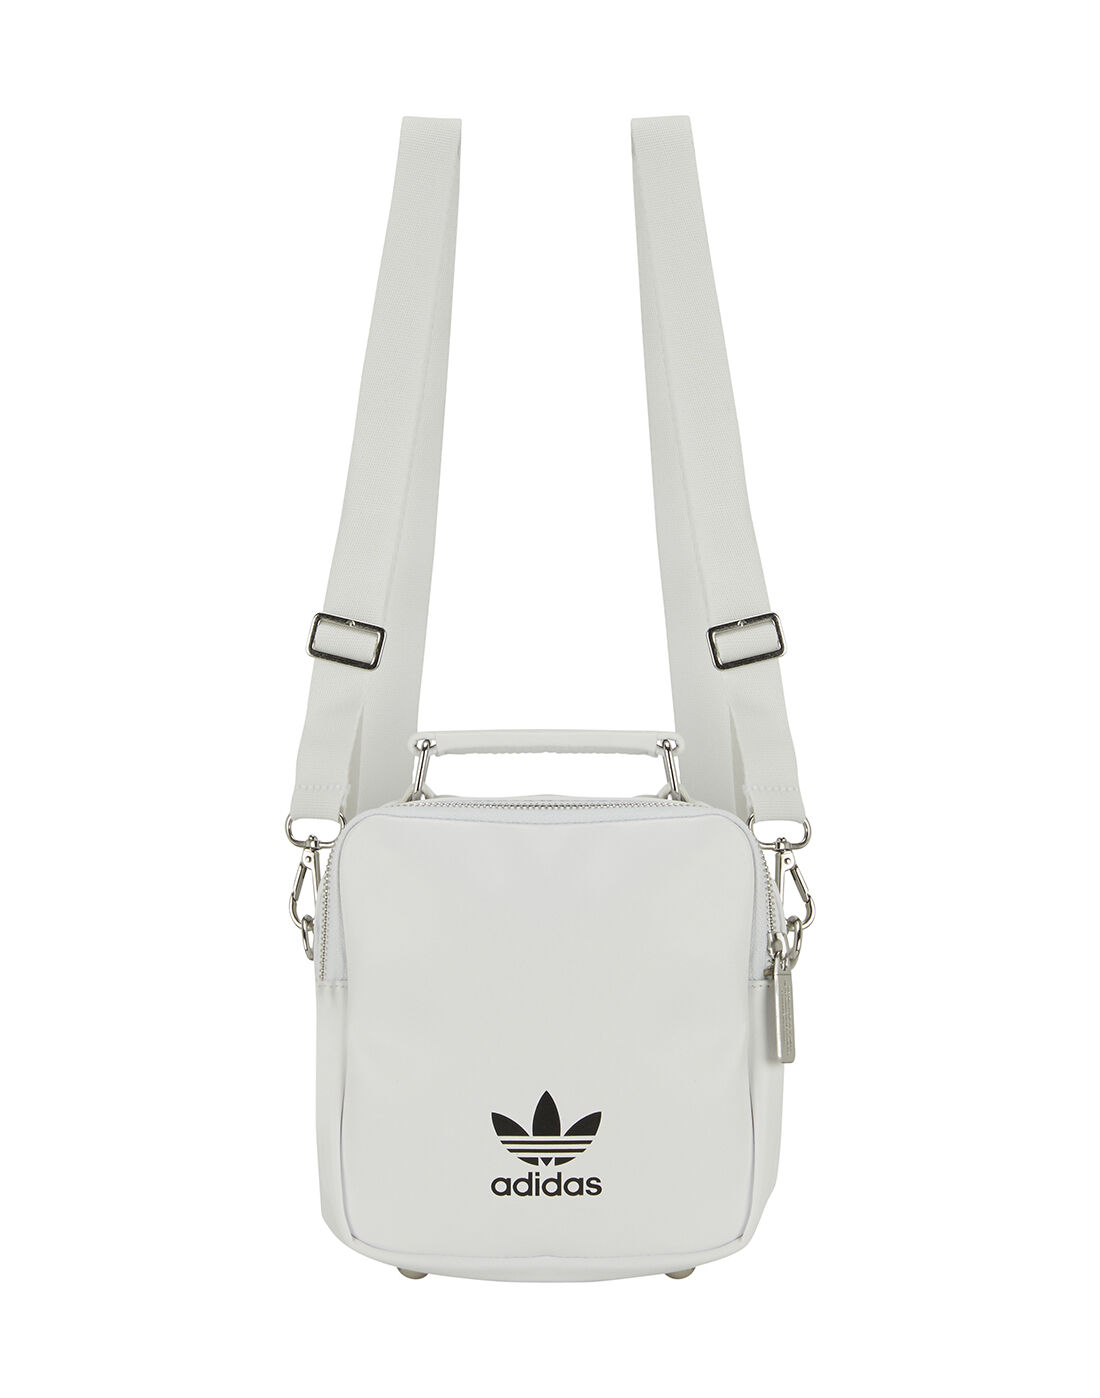 White adidas Originals Mini Festival Bag | Life Style Sports